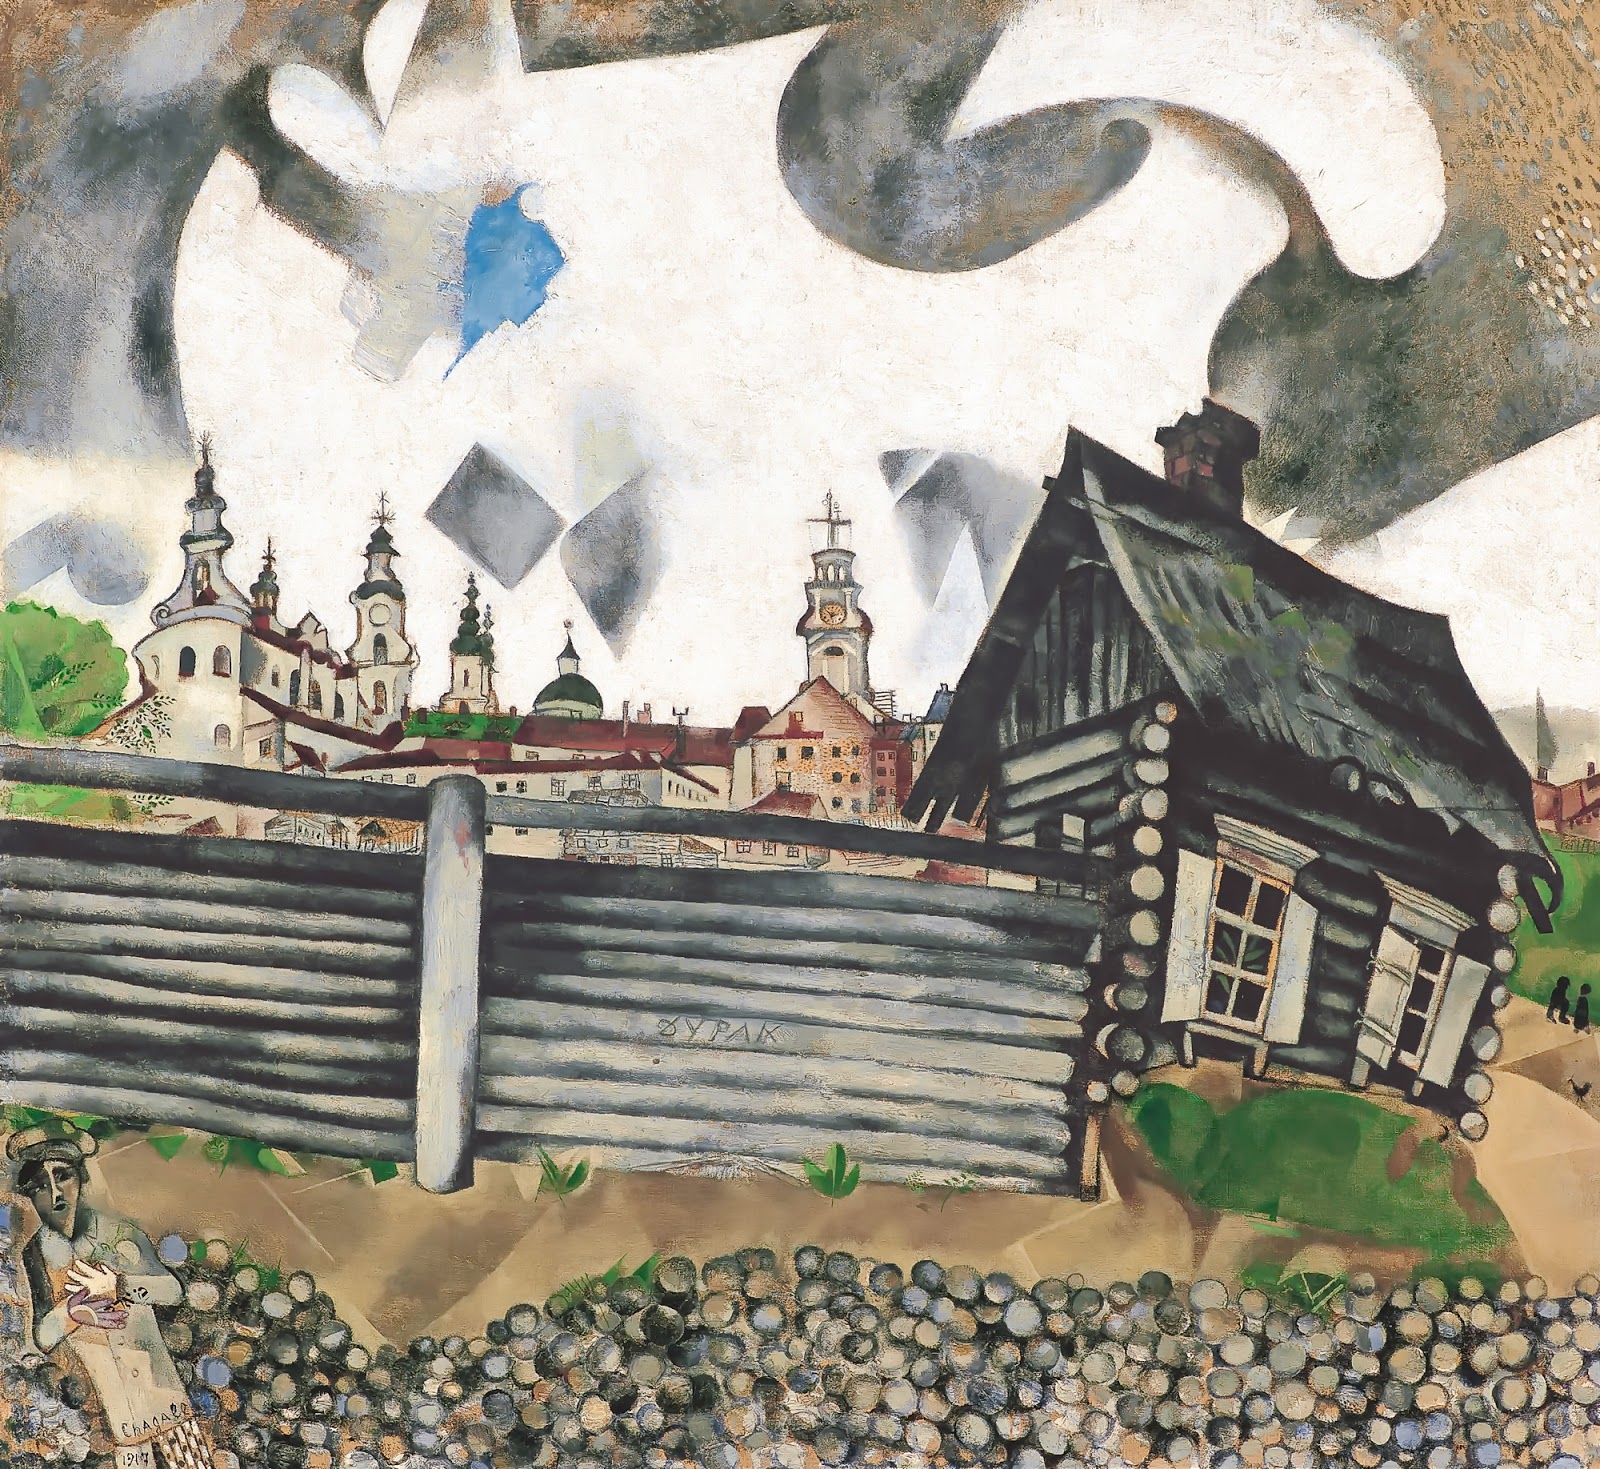 Marc+Chagall-1887-1985 (305).jpg